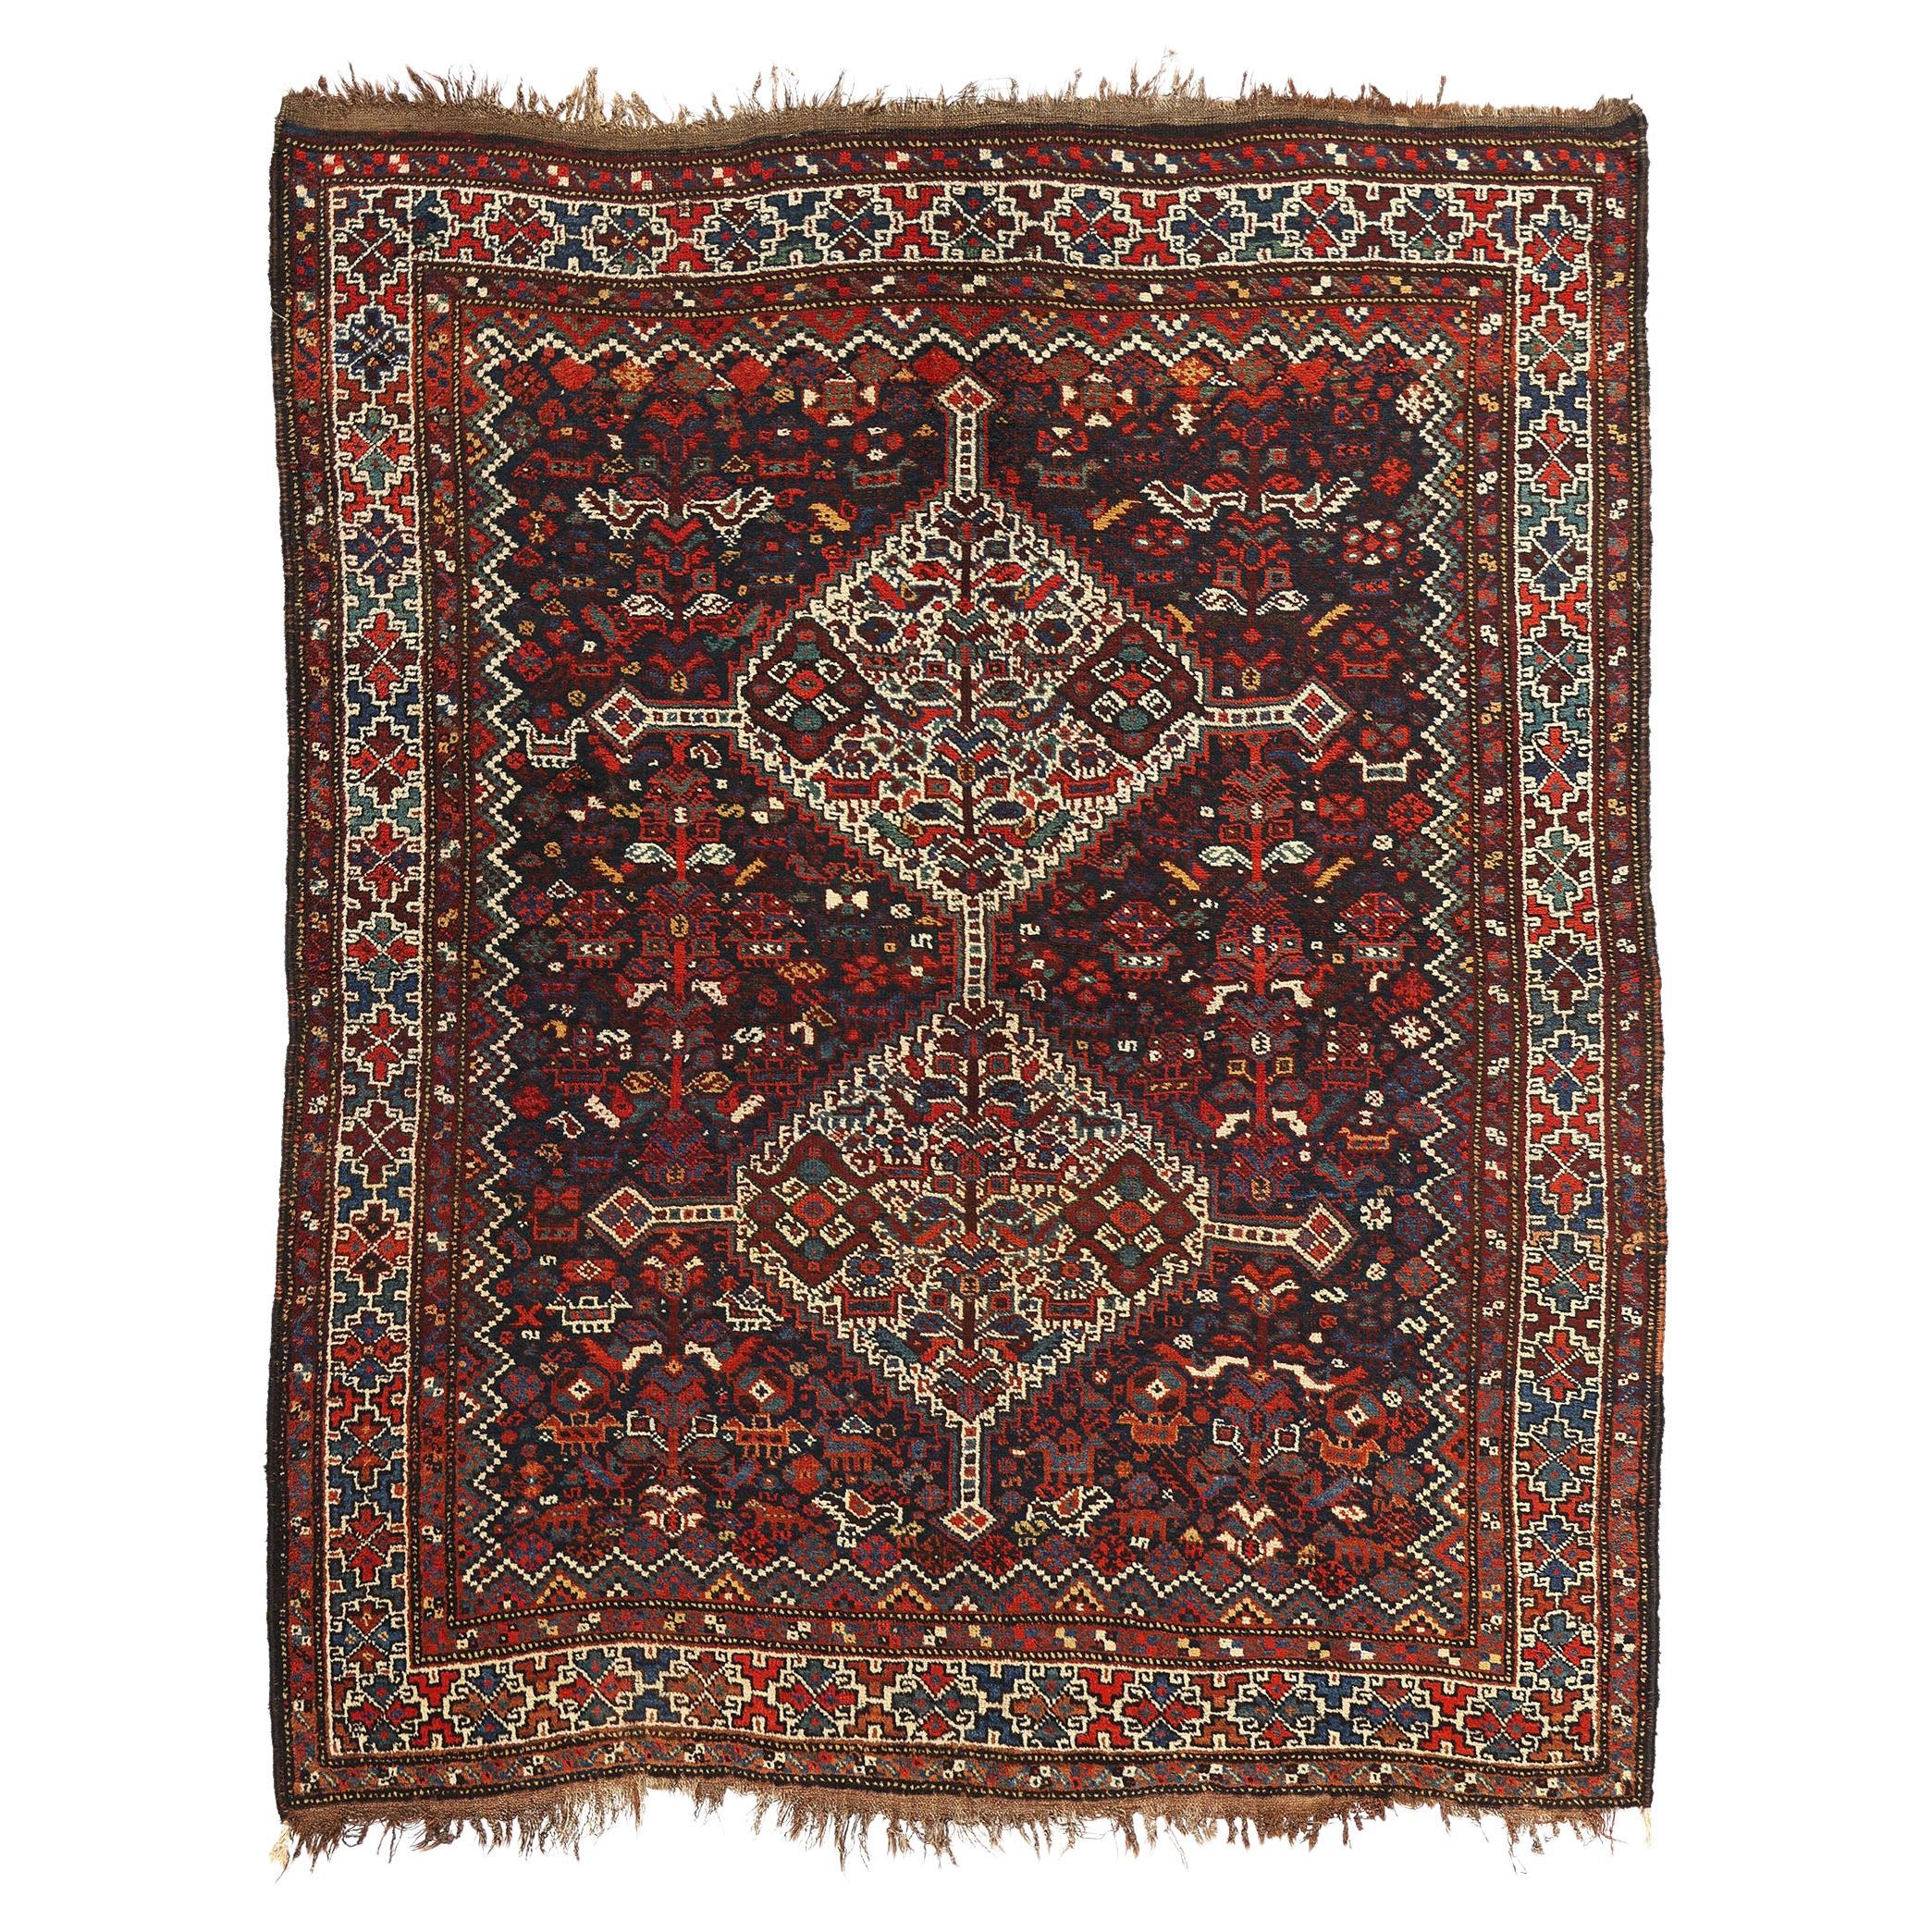 Late 19th Century Antique Persian Shiraz Rug